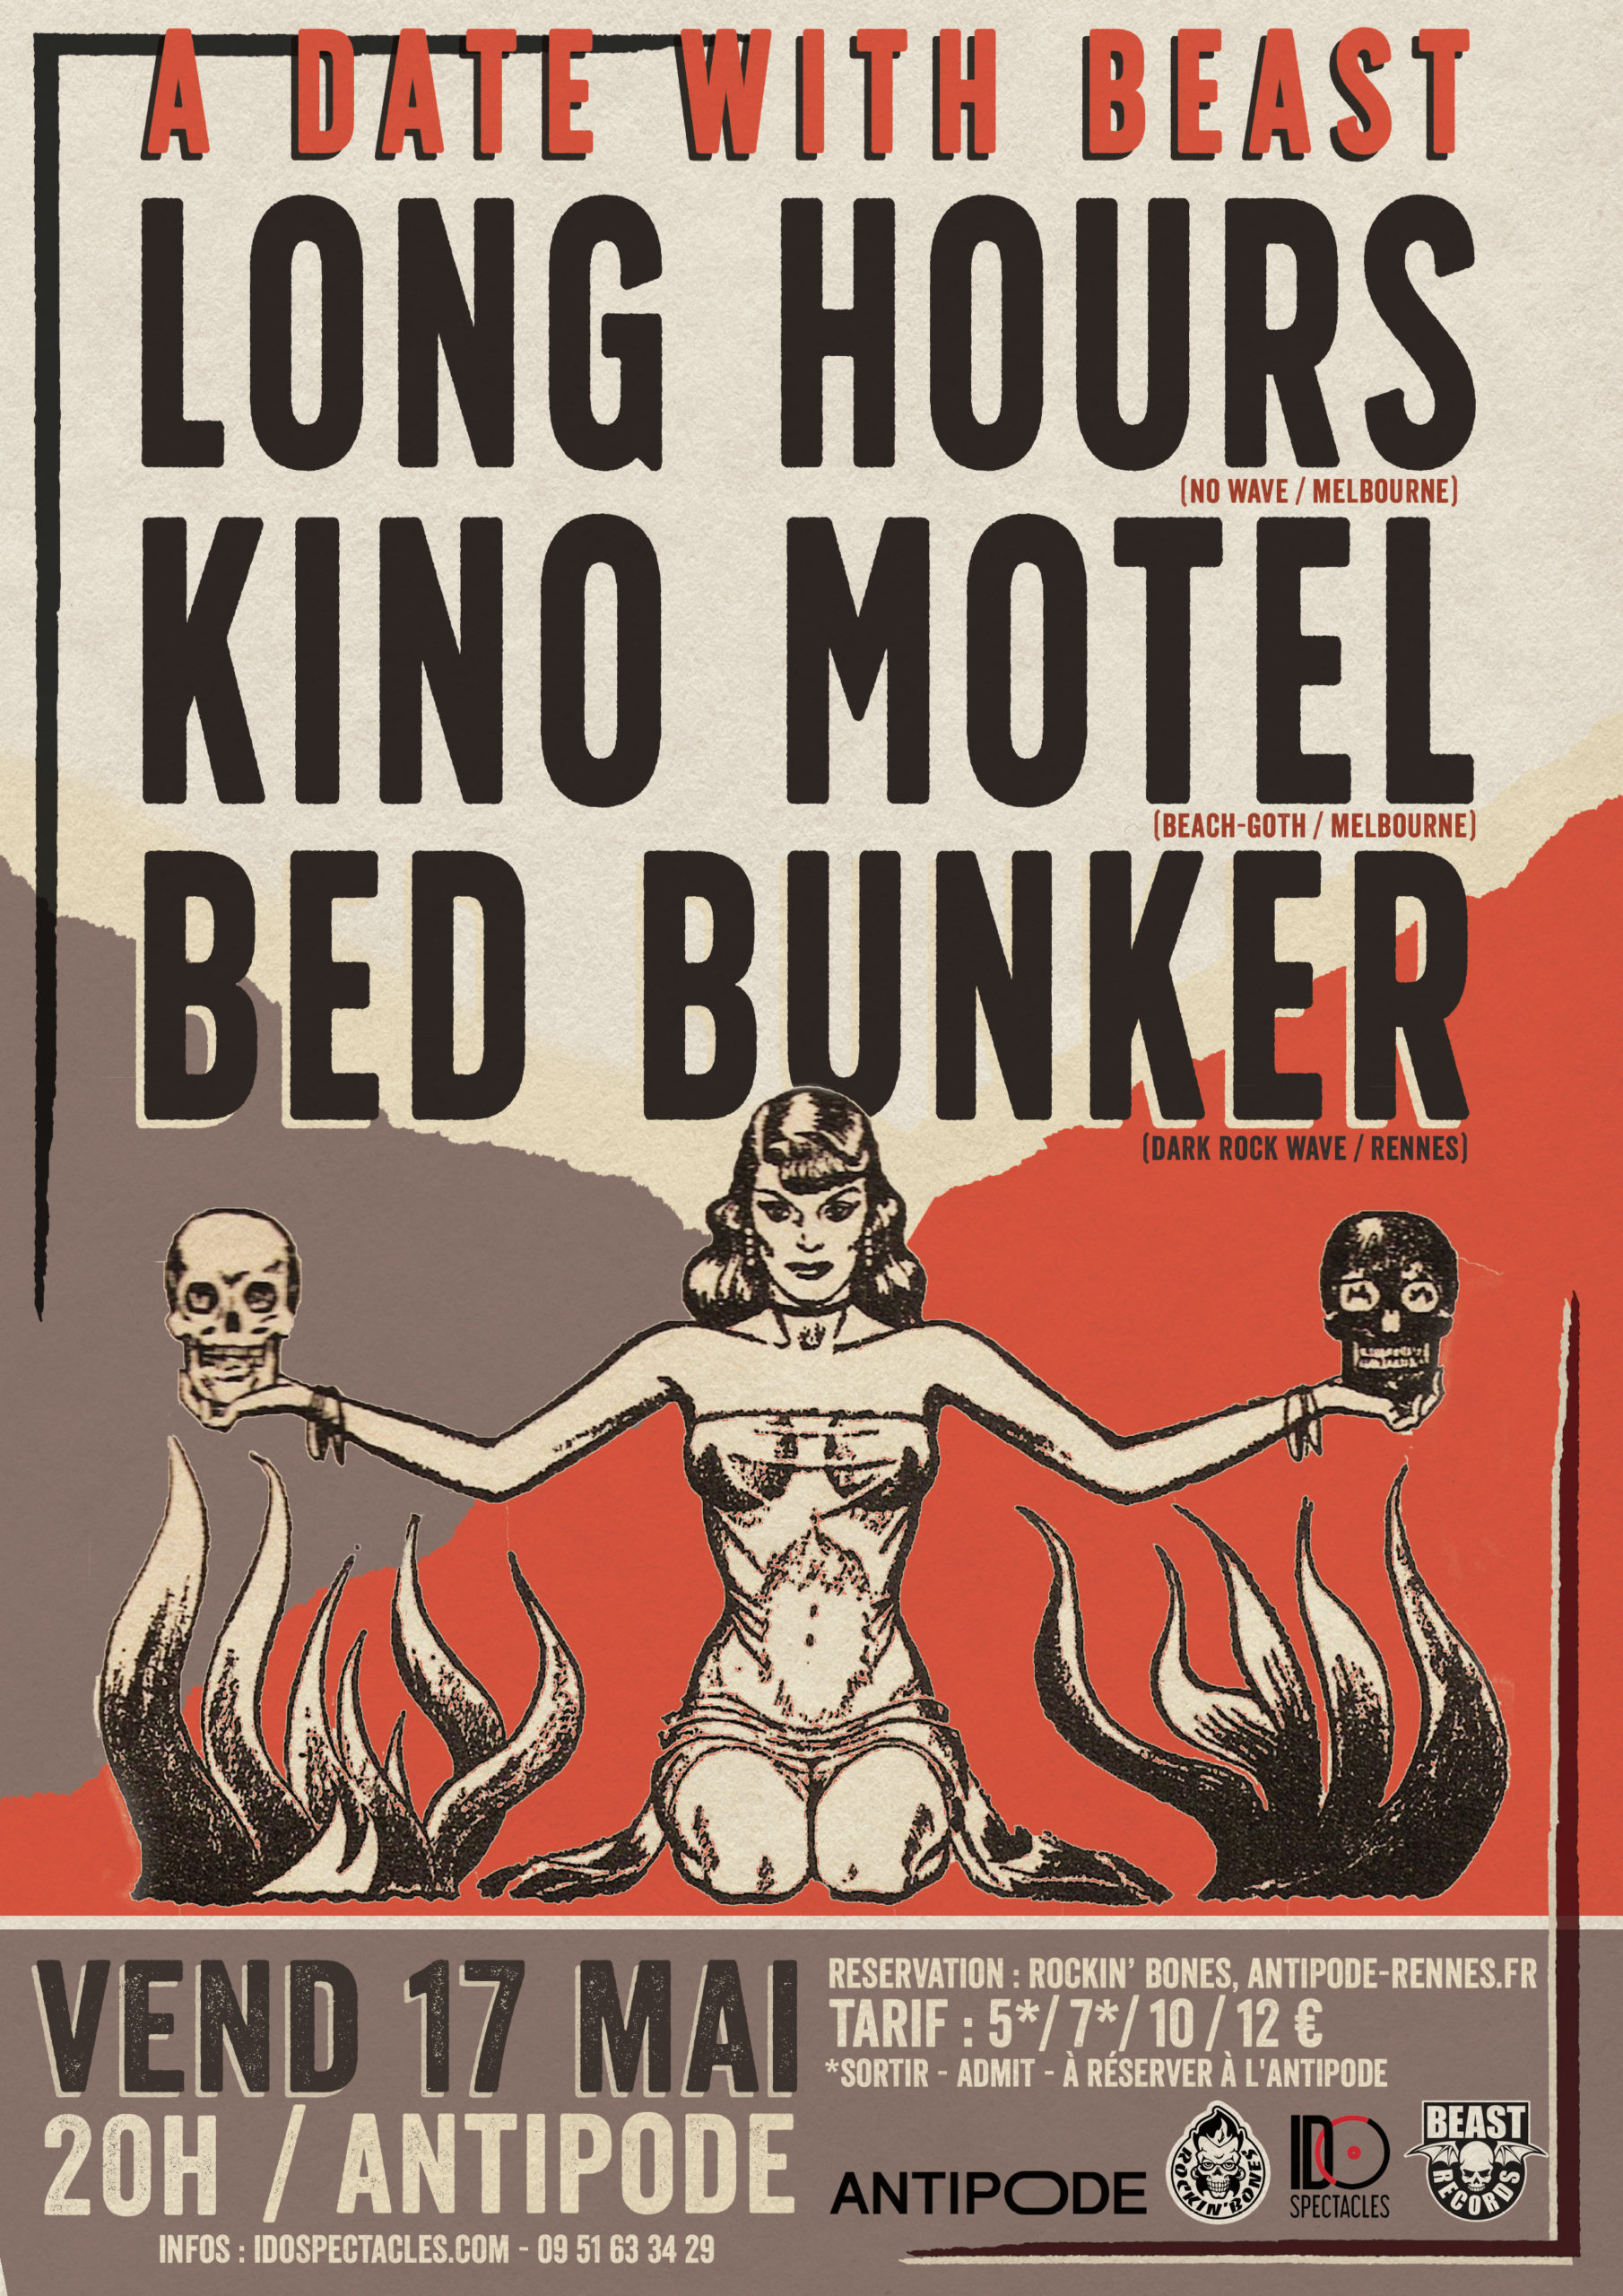 KINO MOTEL - BED BUNKER -LONGHOURS ..